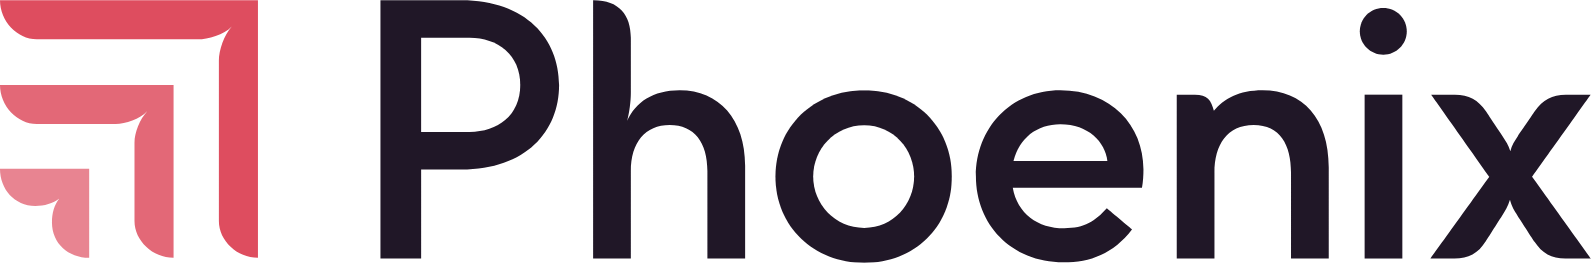 Phoenix Group logo large (transparent PNG)